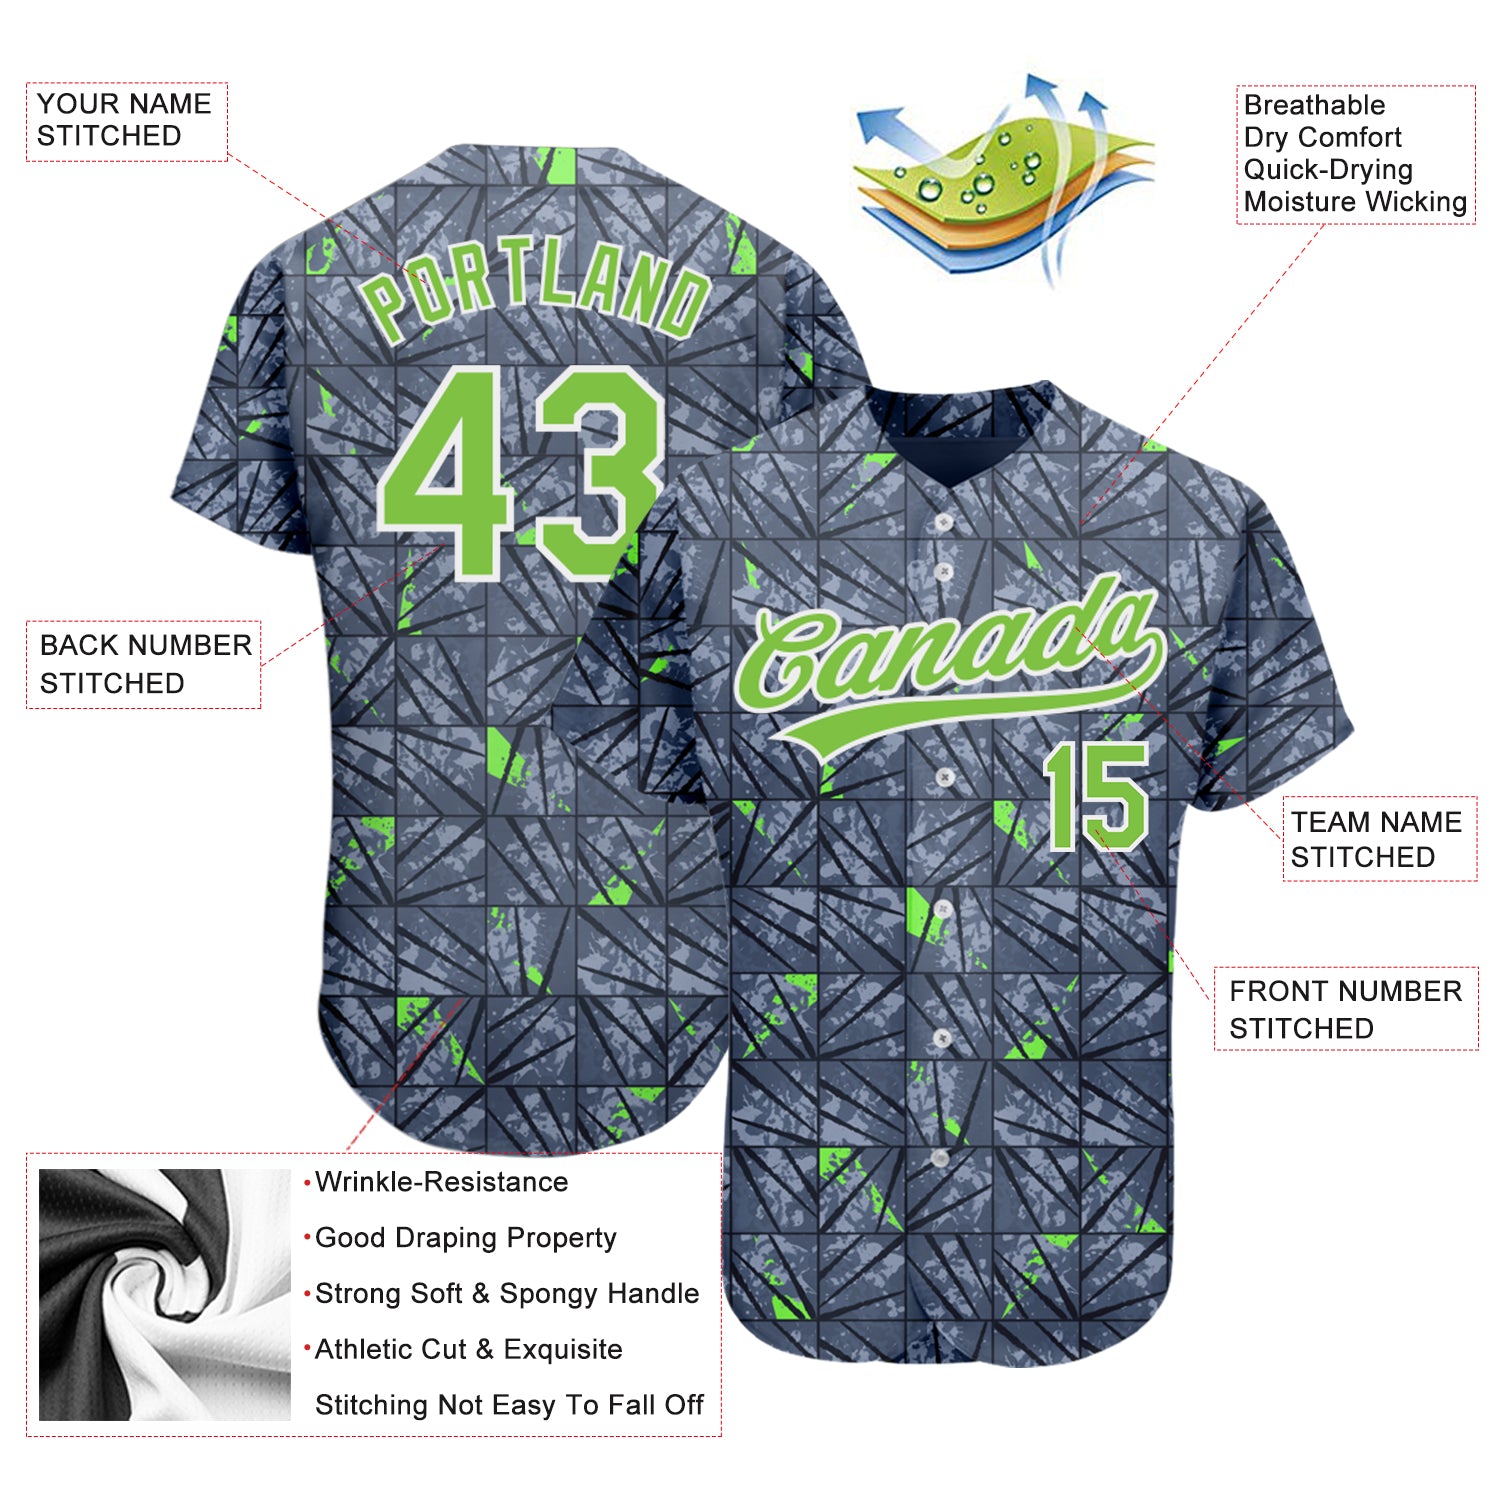 Custom Gray Baseball Jersey Neon Green-Navy Authentic - FansIdea